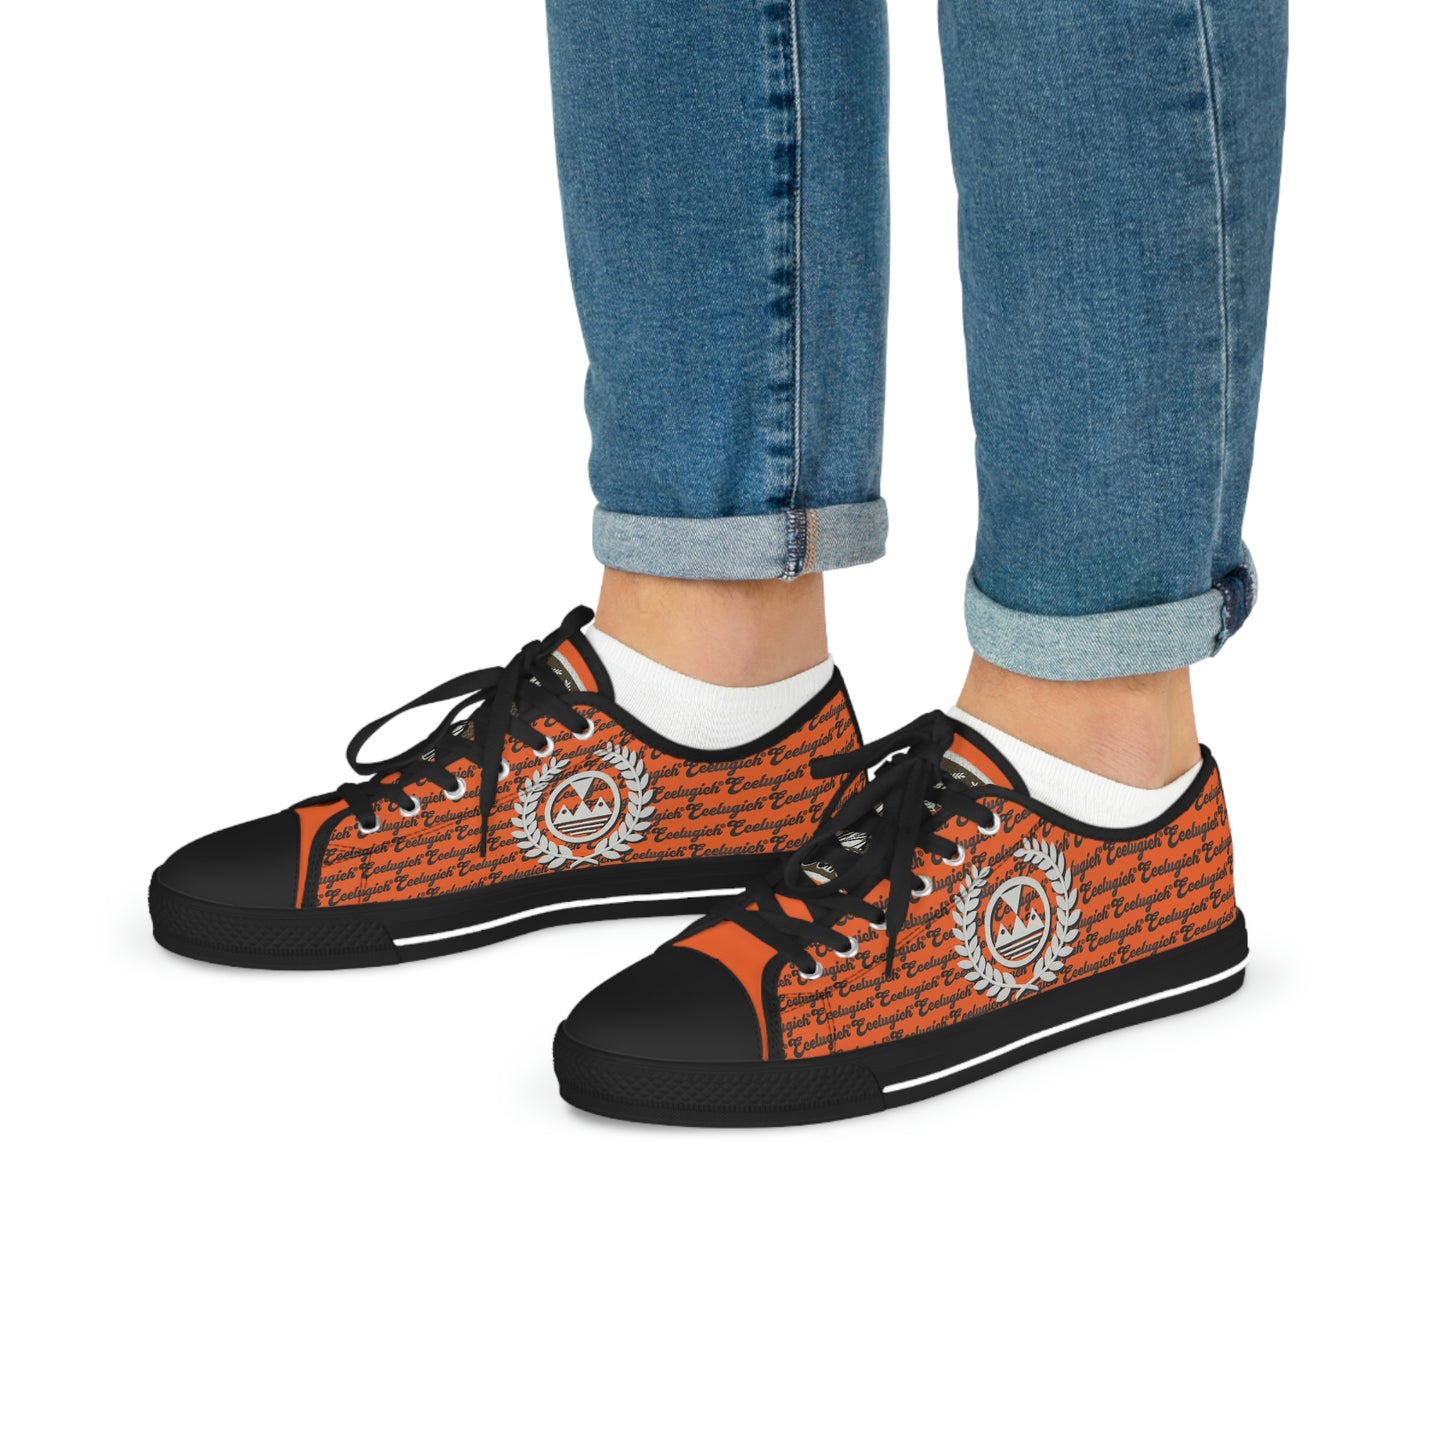 Ecelugich Orange Men's Low Top Sneakers